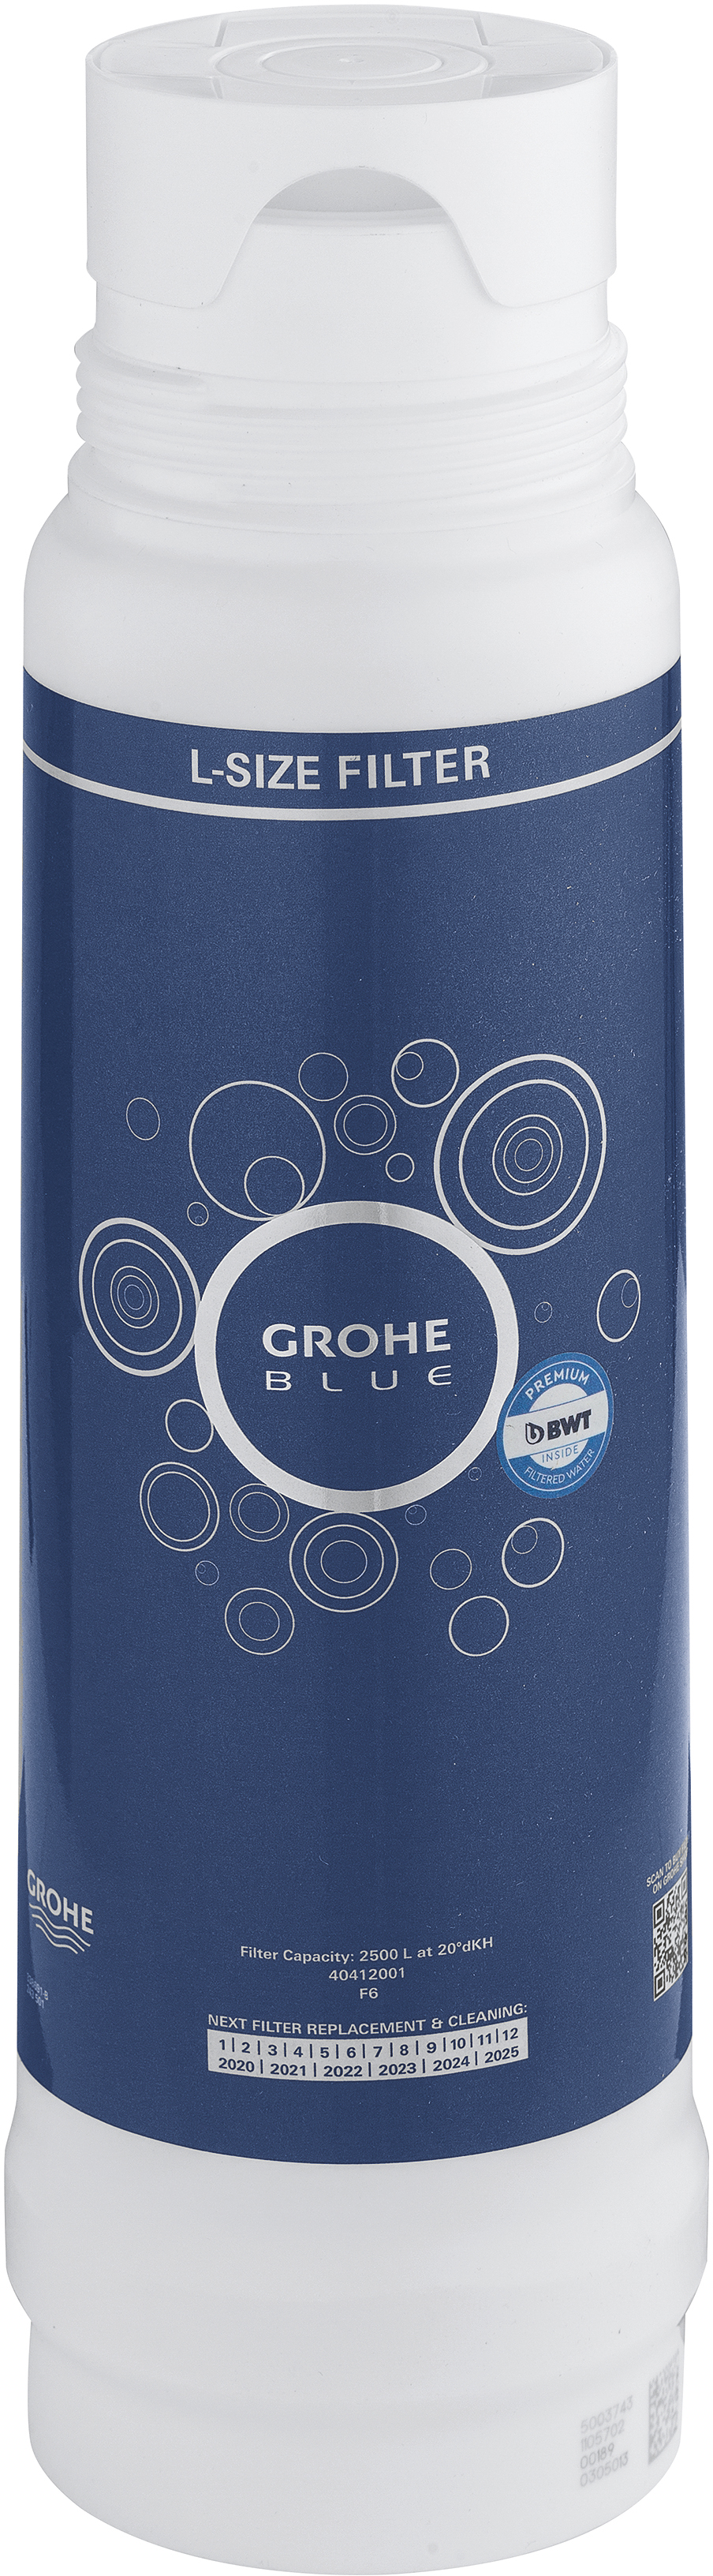 Фильтр Grohe Blue 40412001 L-Size, без насадки - 0